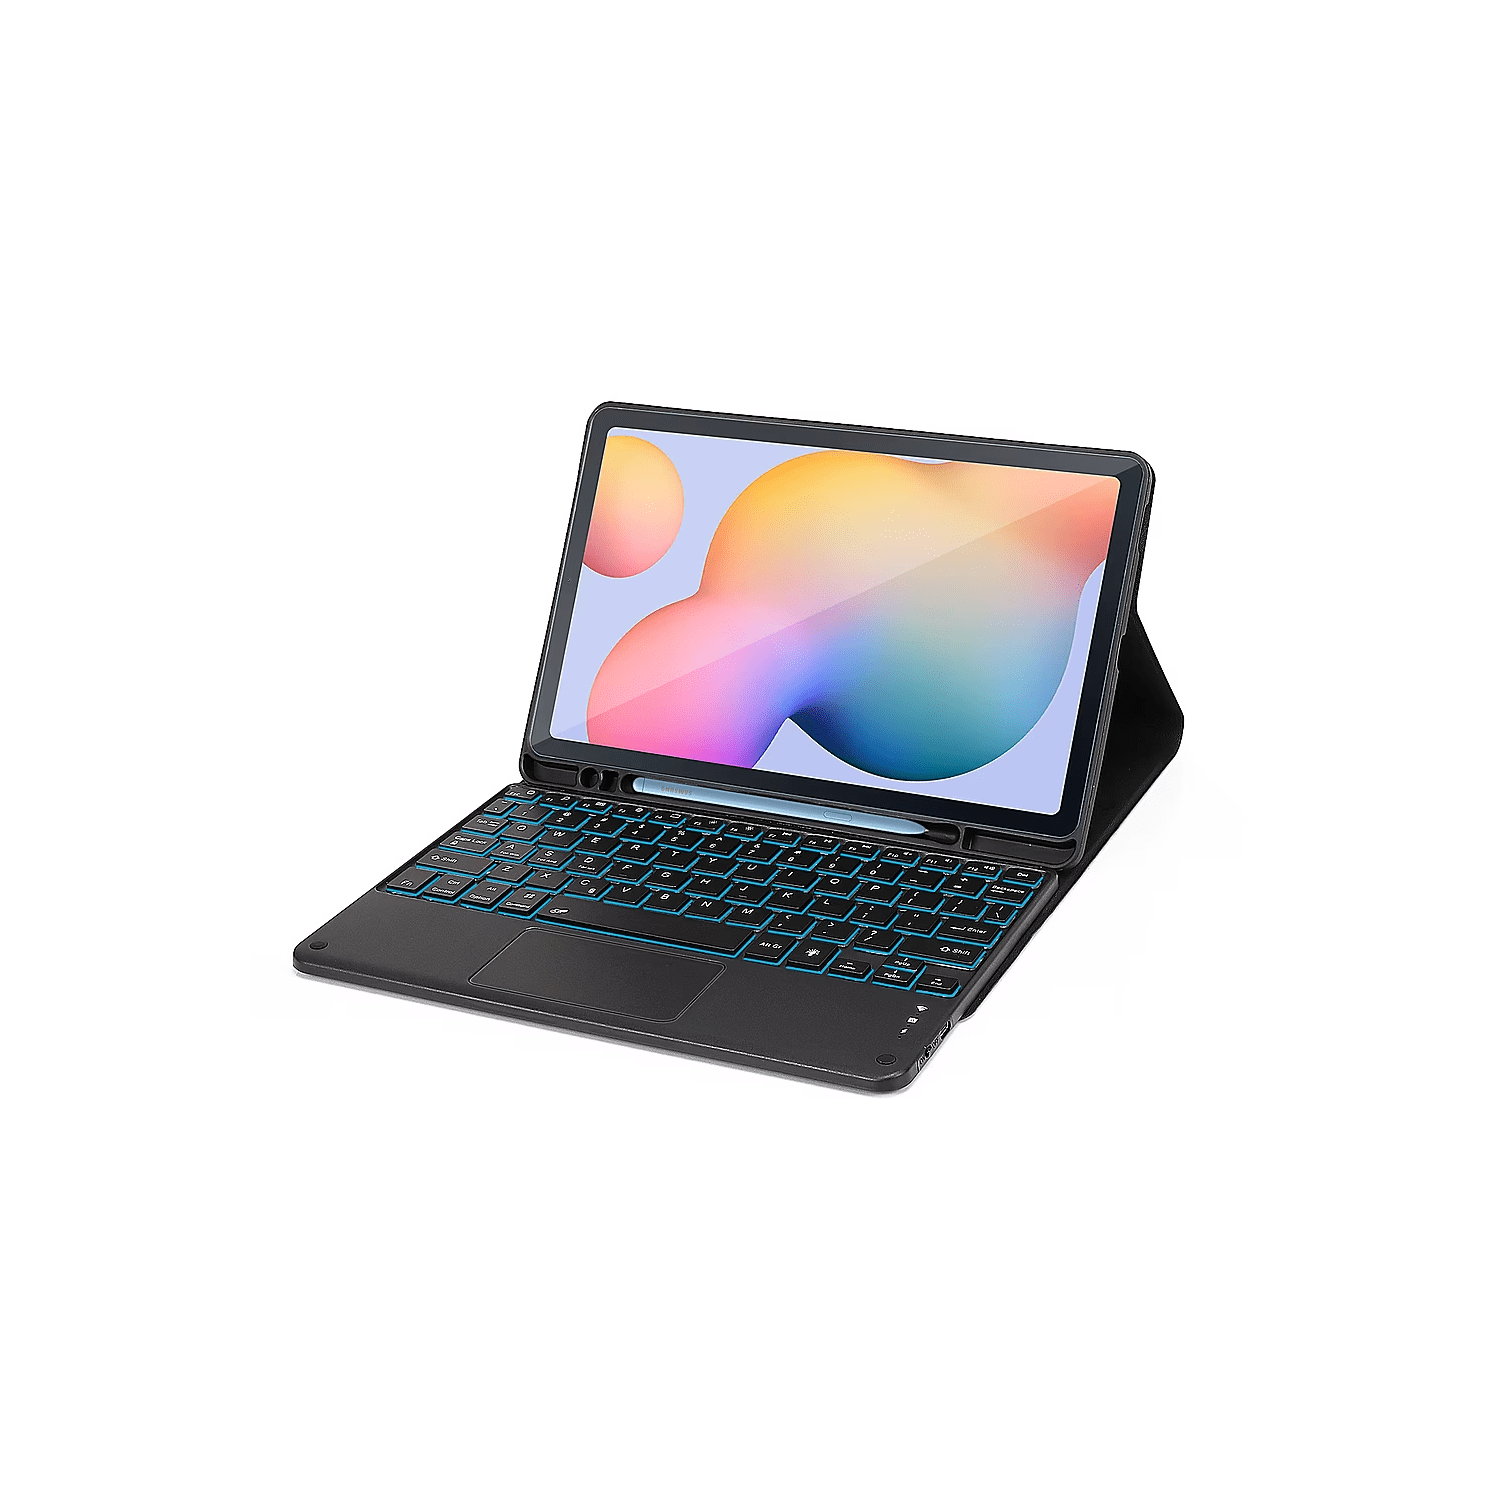 SaharaCase Keyboard Folio Case for Samsung Galaxy Tab S6 Lite - Black